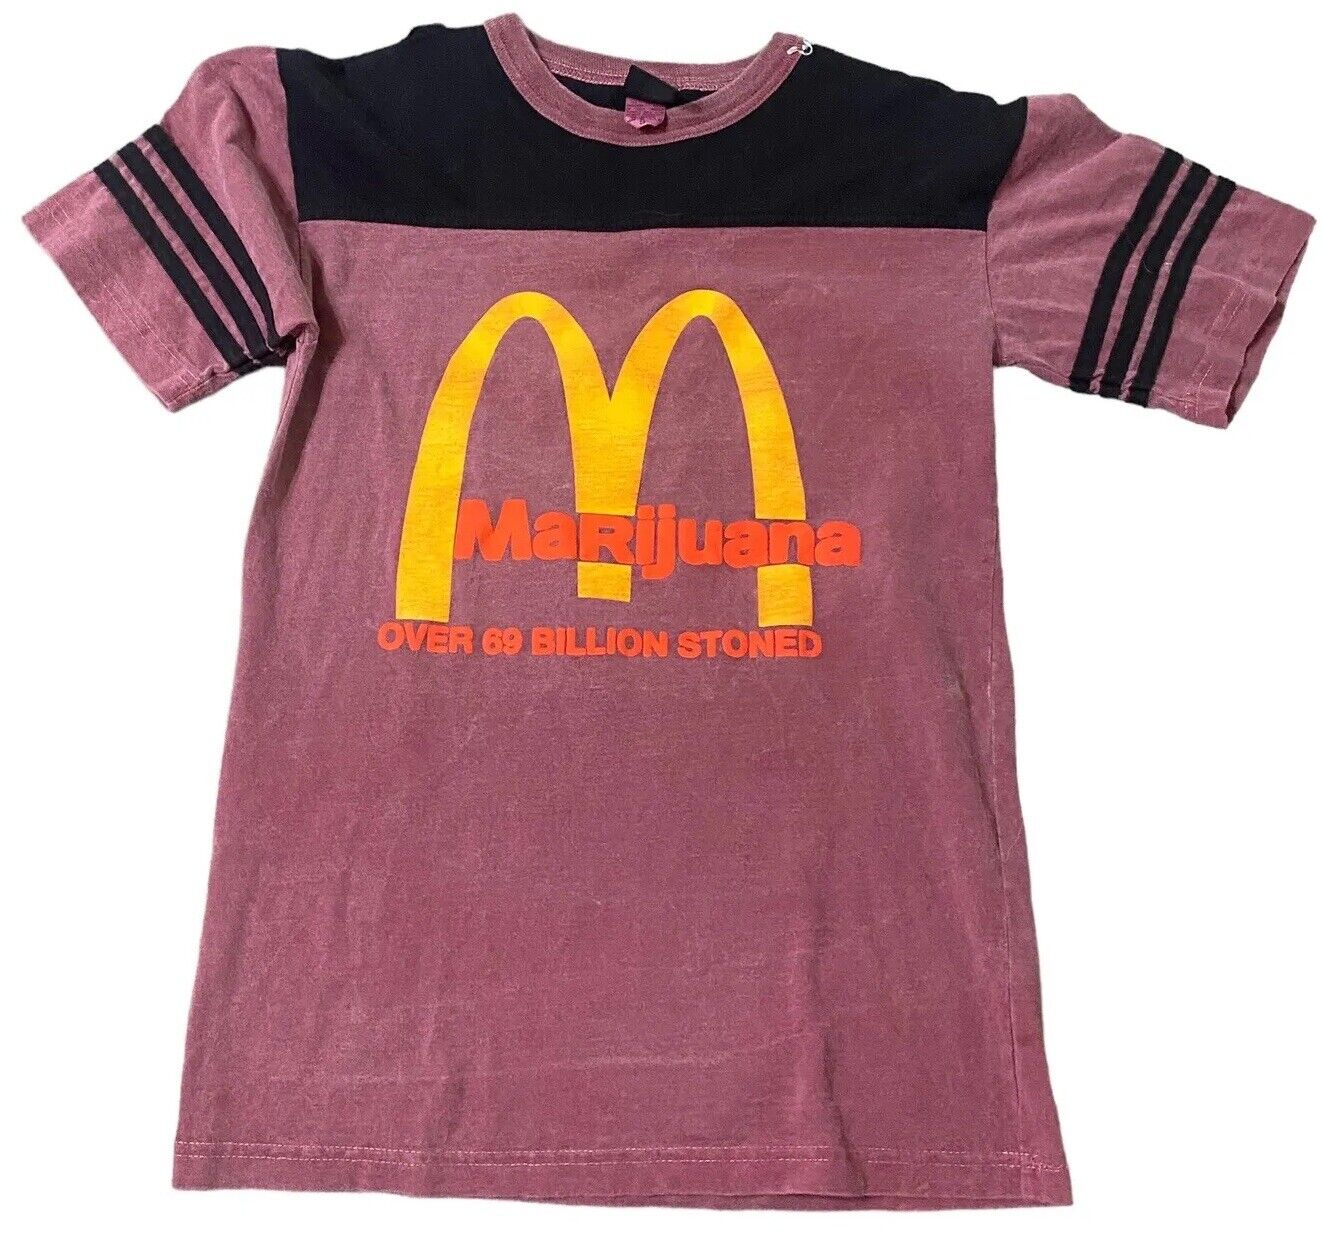 Vintage McDonalds Marijuana Over 50 Billion Stoned Shirt Size S Made In USA